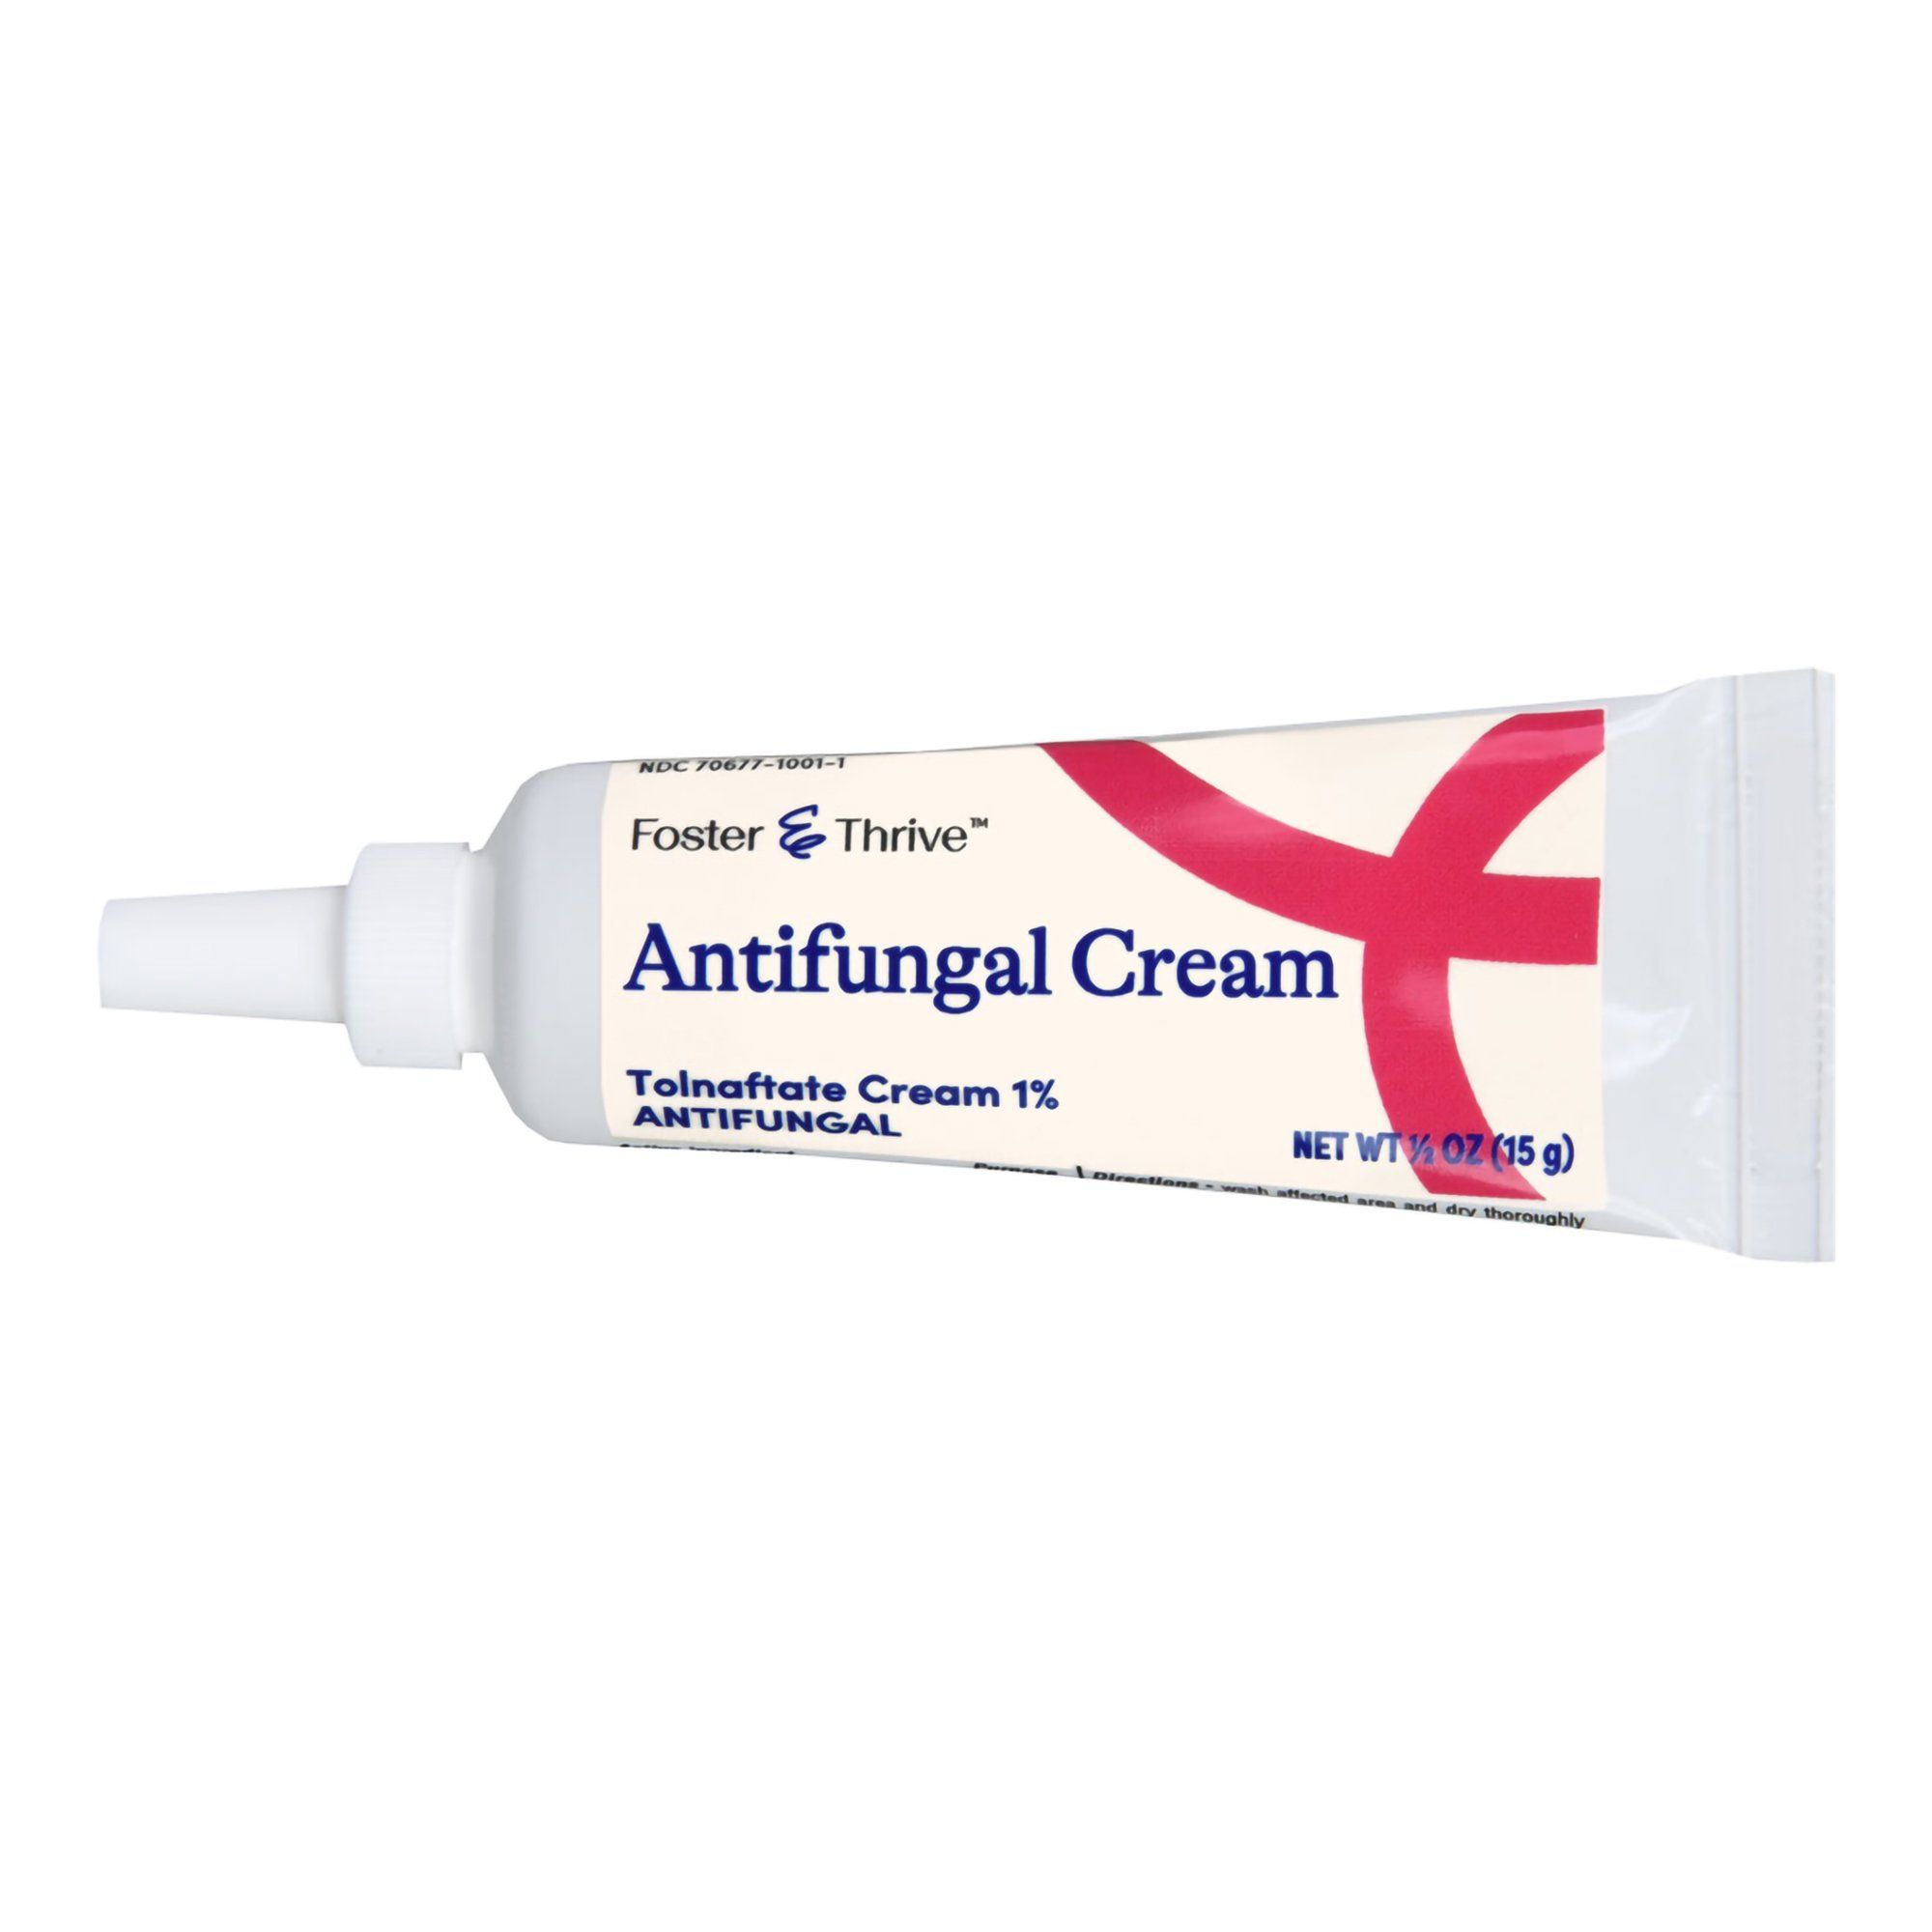 Foster & Thrive Antifungal Tolnaftate Cream 1% - .5 oz